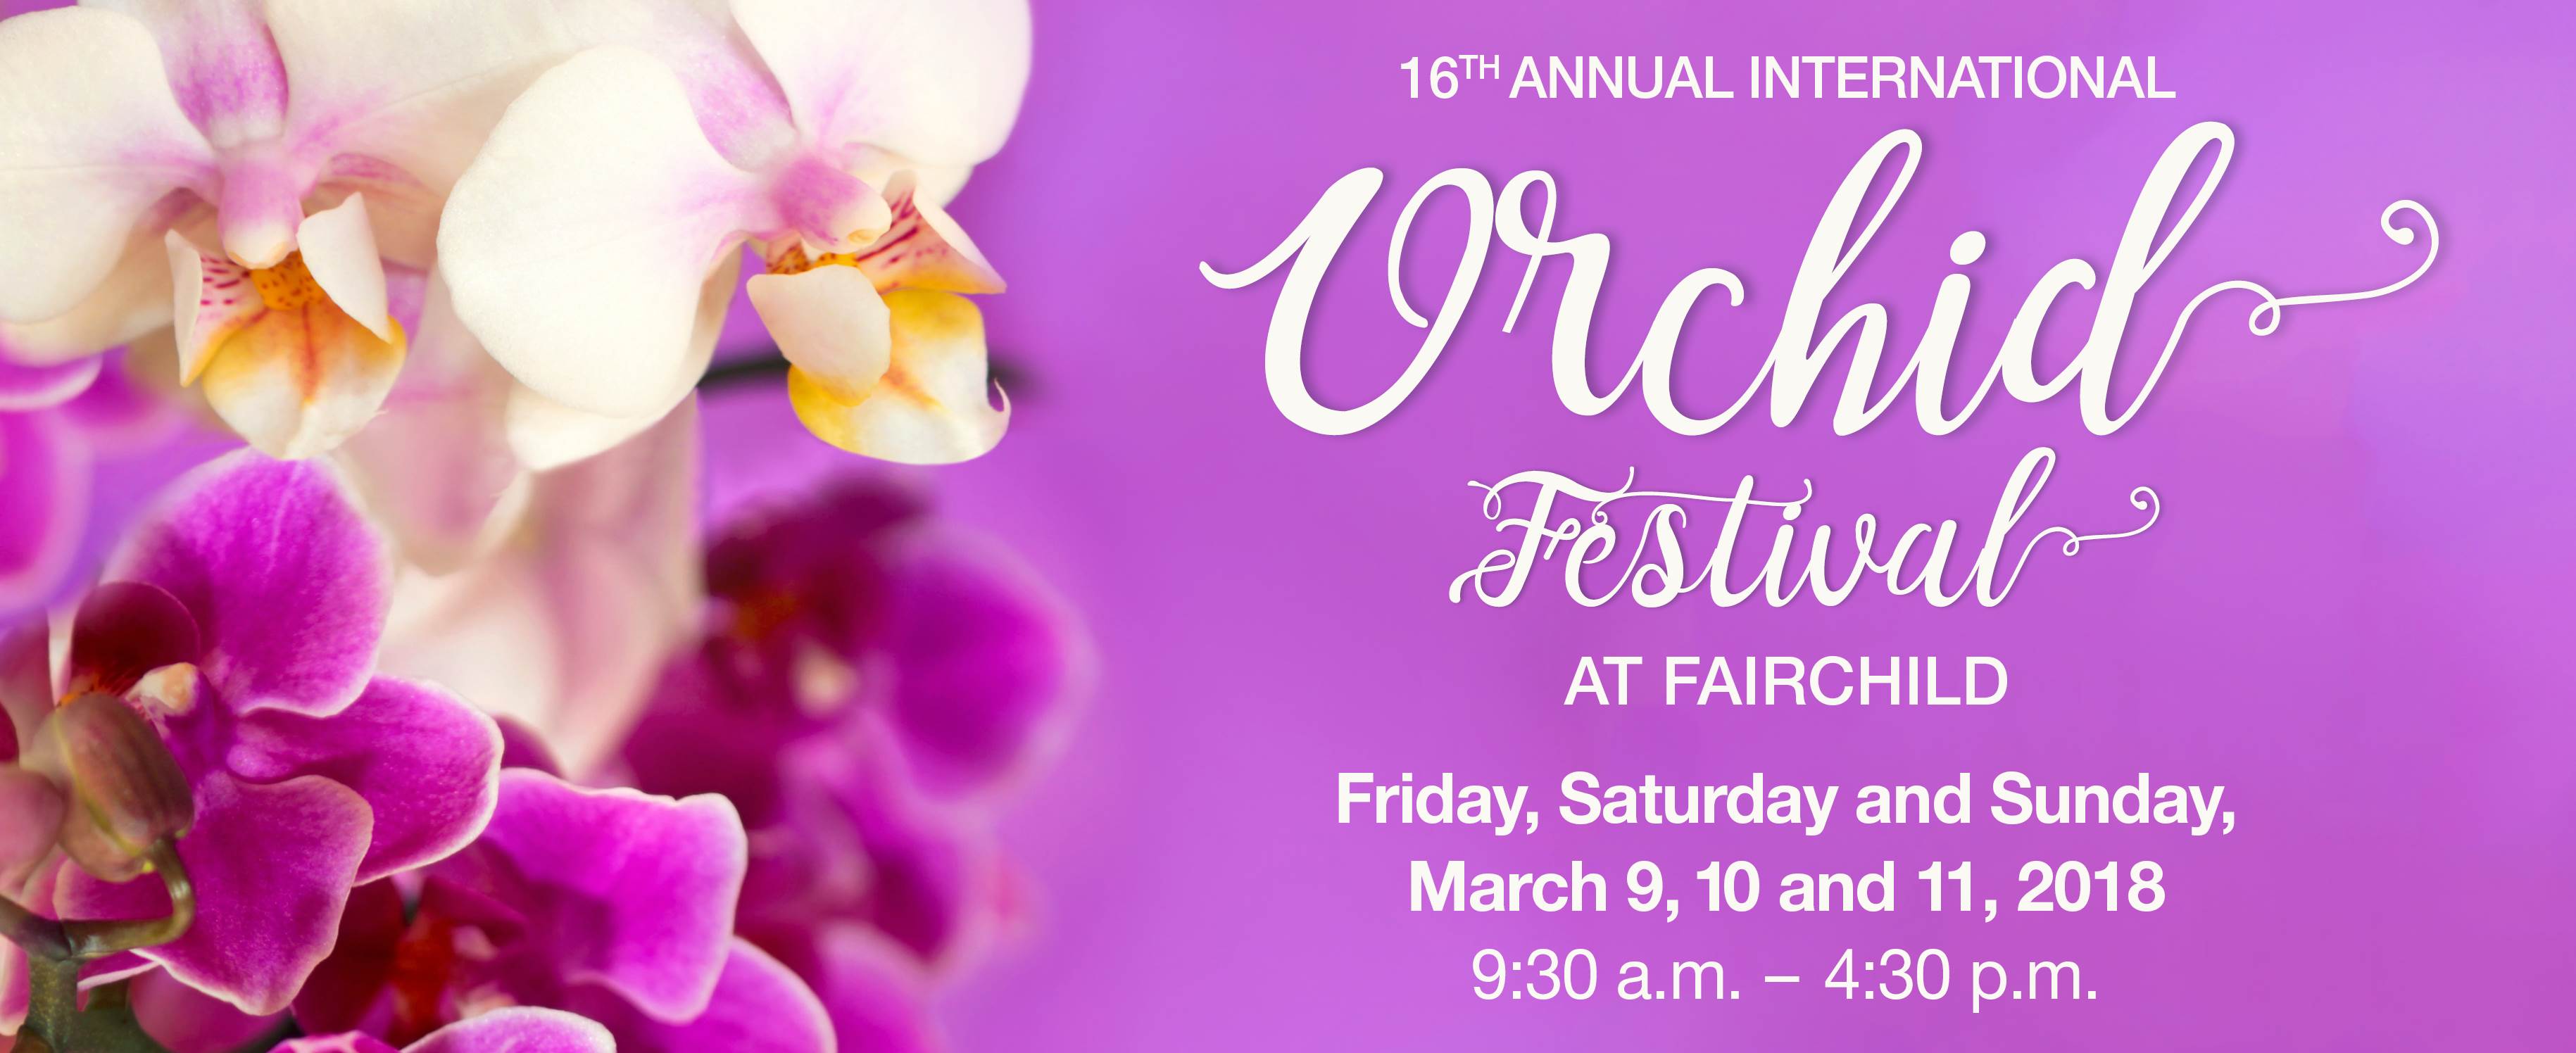 International Orchid Festival